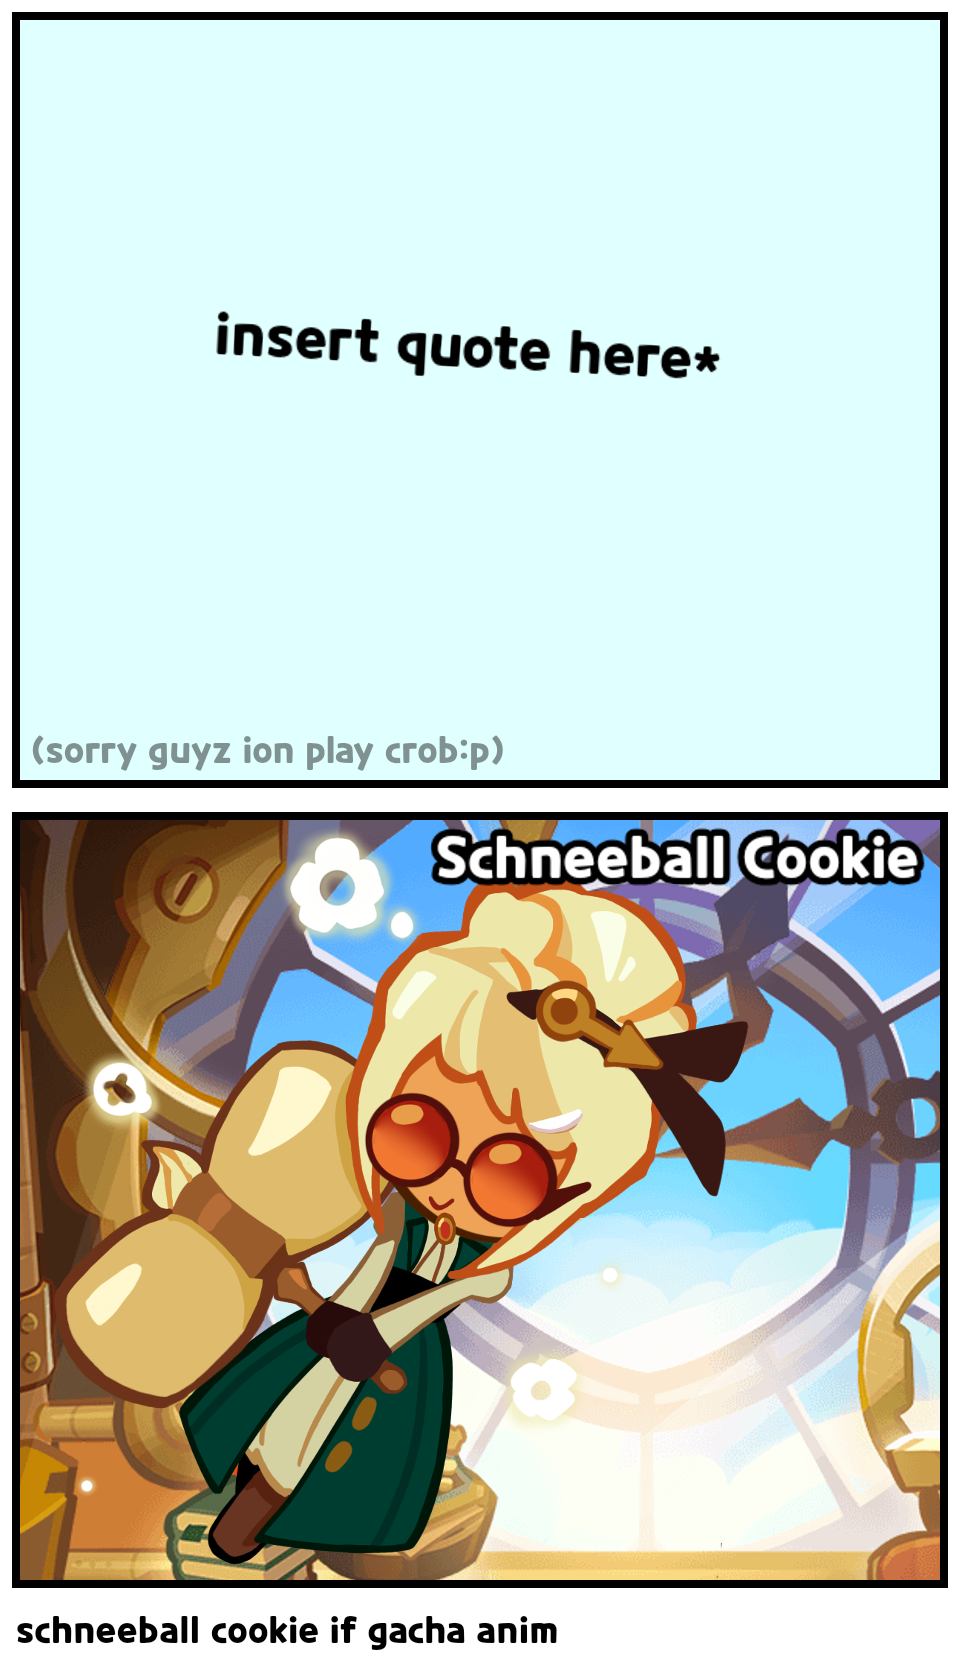 schneeball cookie if gacha anim